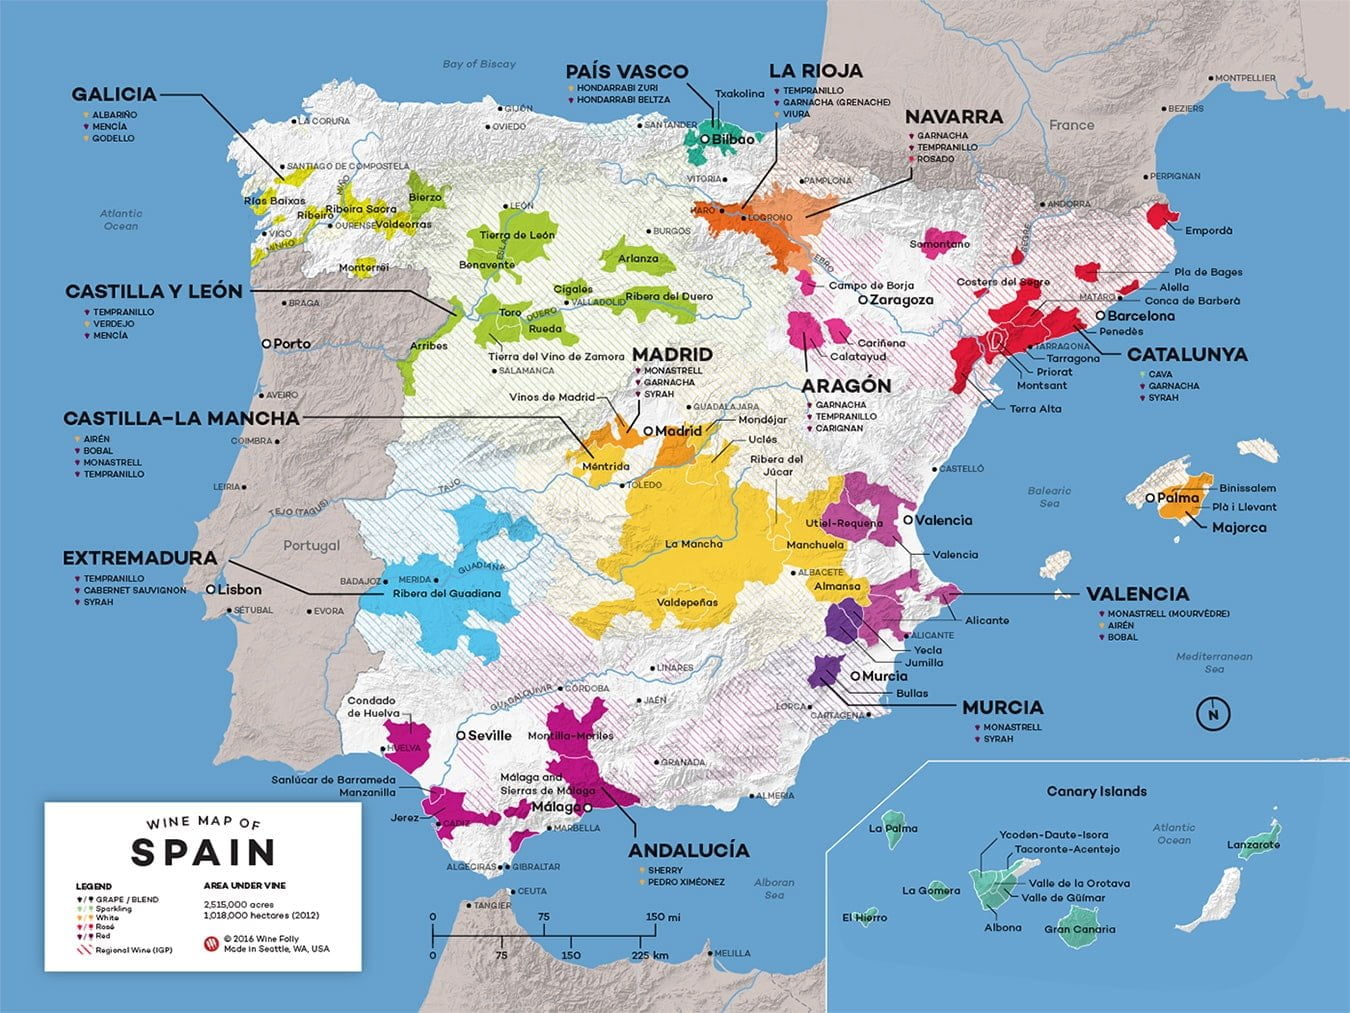 Vinkort over Spanien